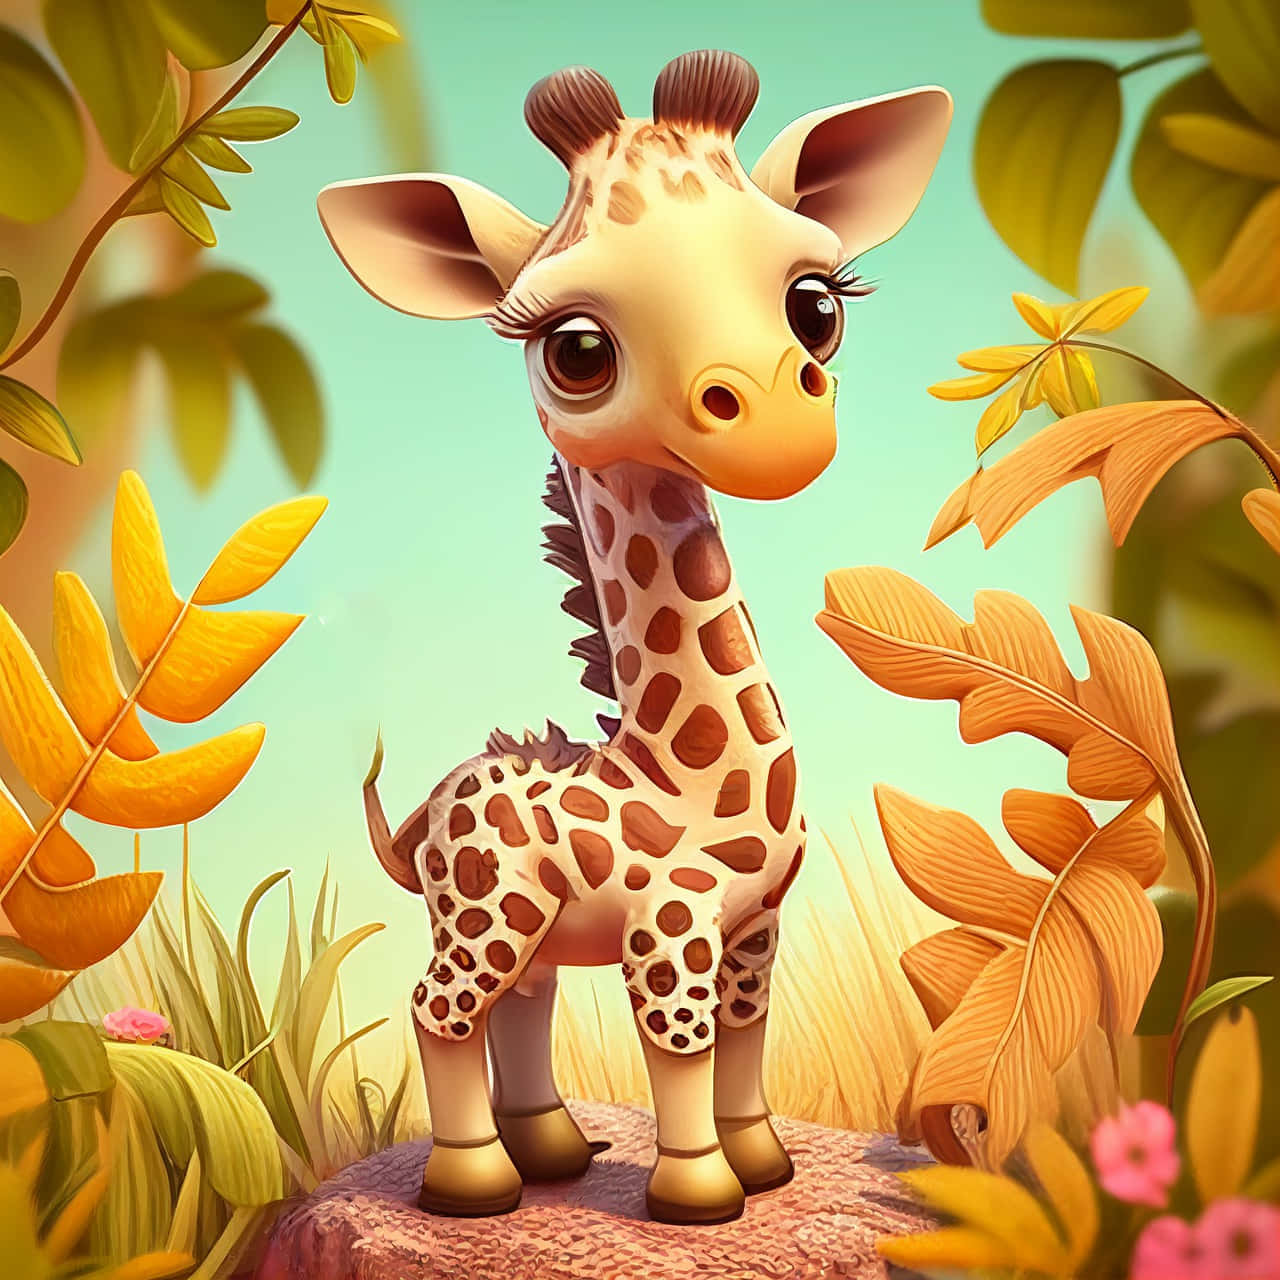 Adorable Baby Giraffe Enjoying His Sunny Day in the Savannah